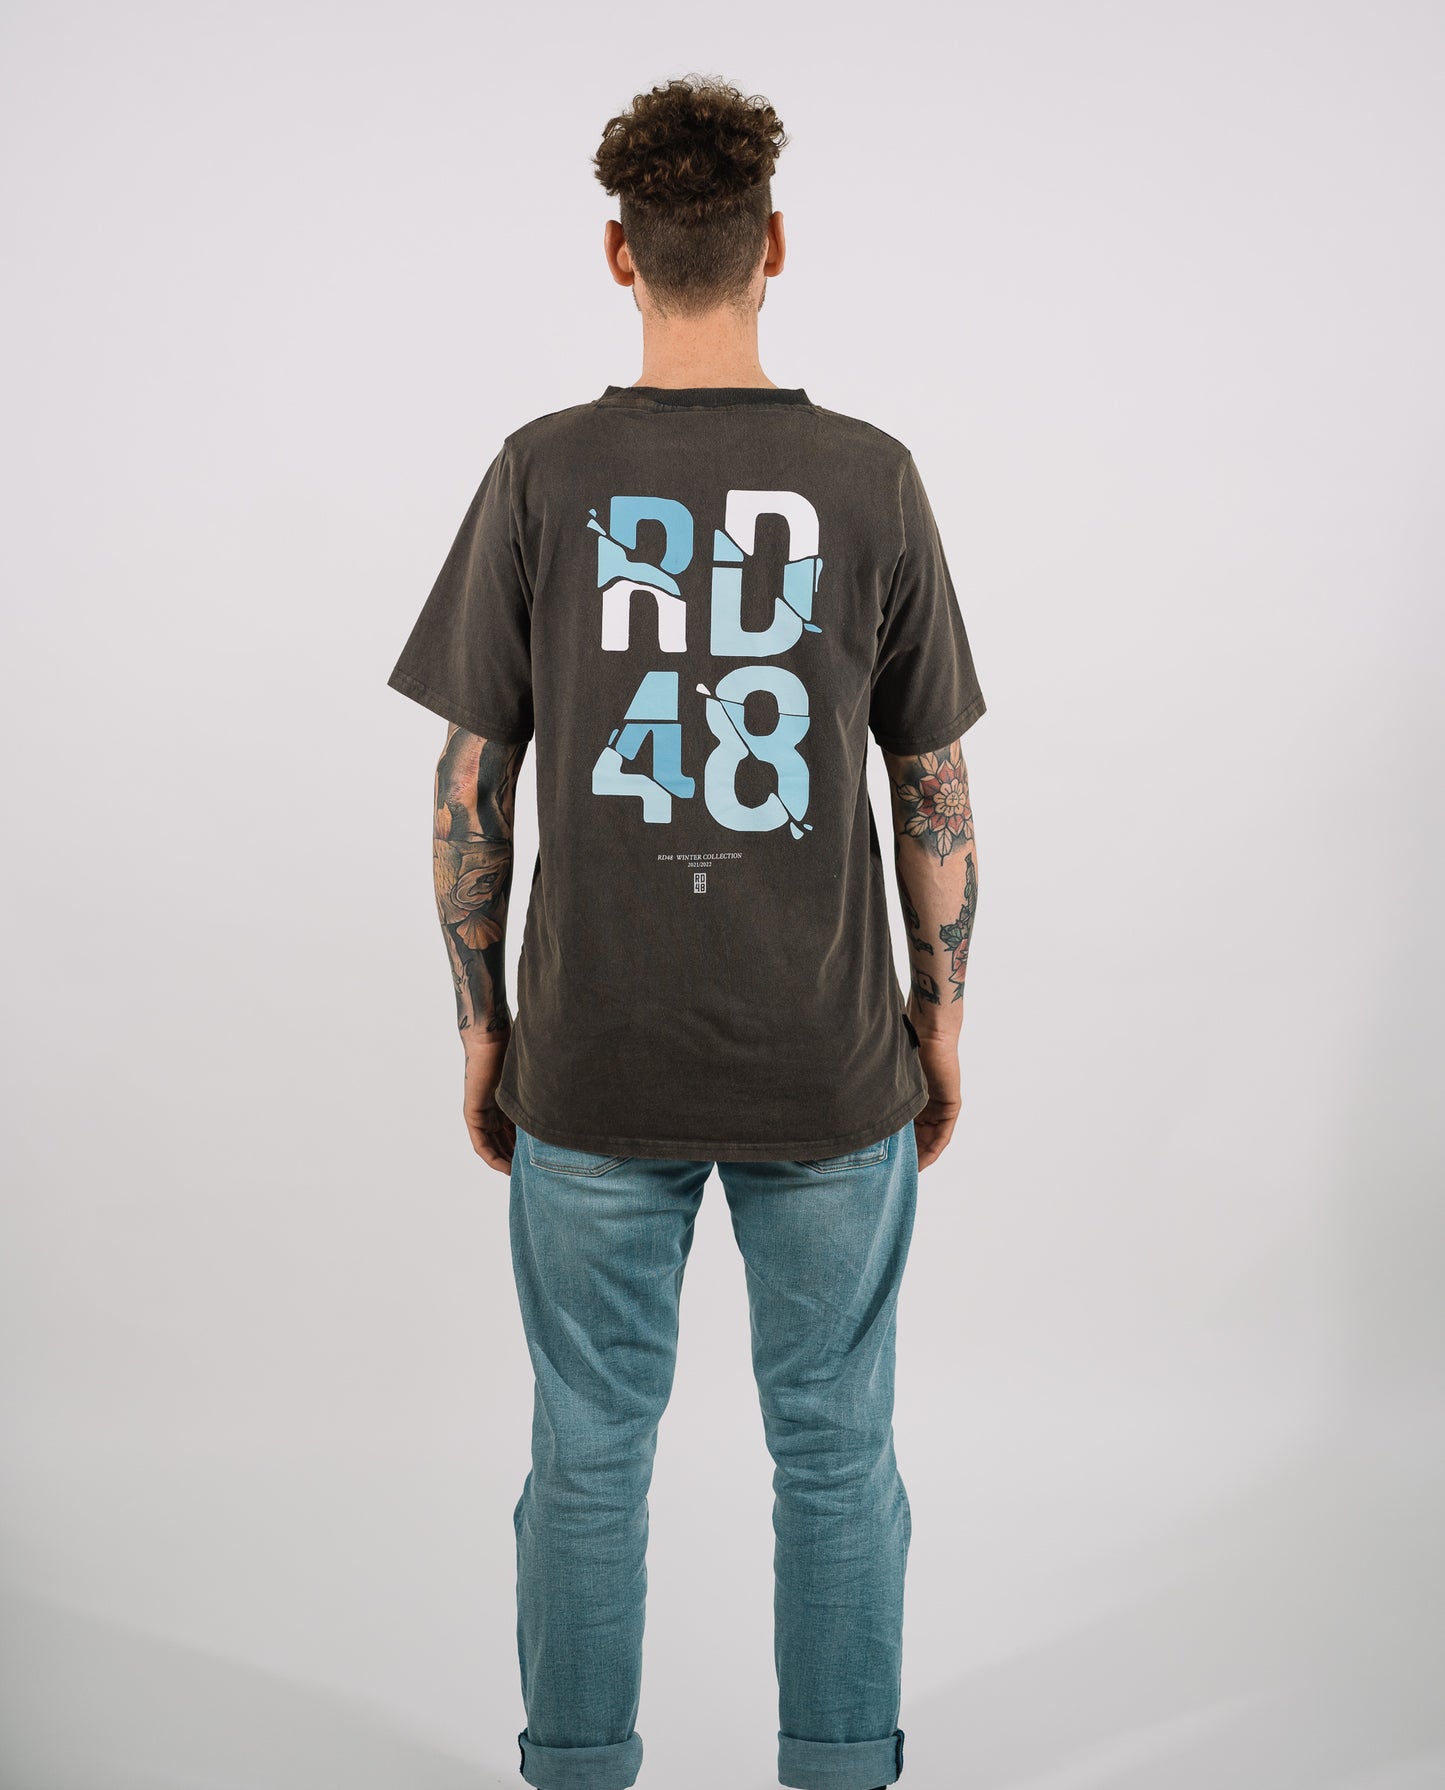 RD48 Icefall T-Shirt